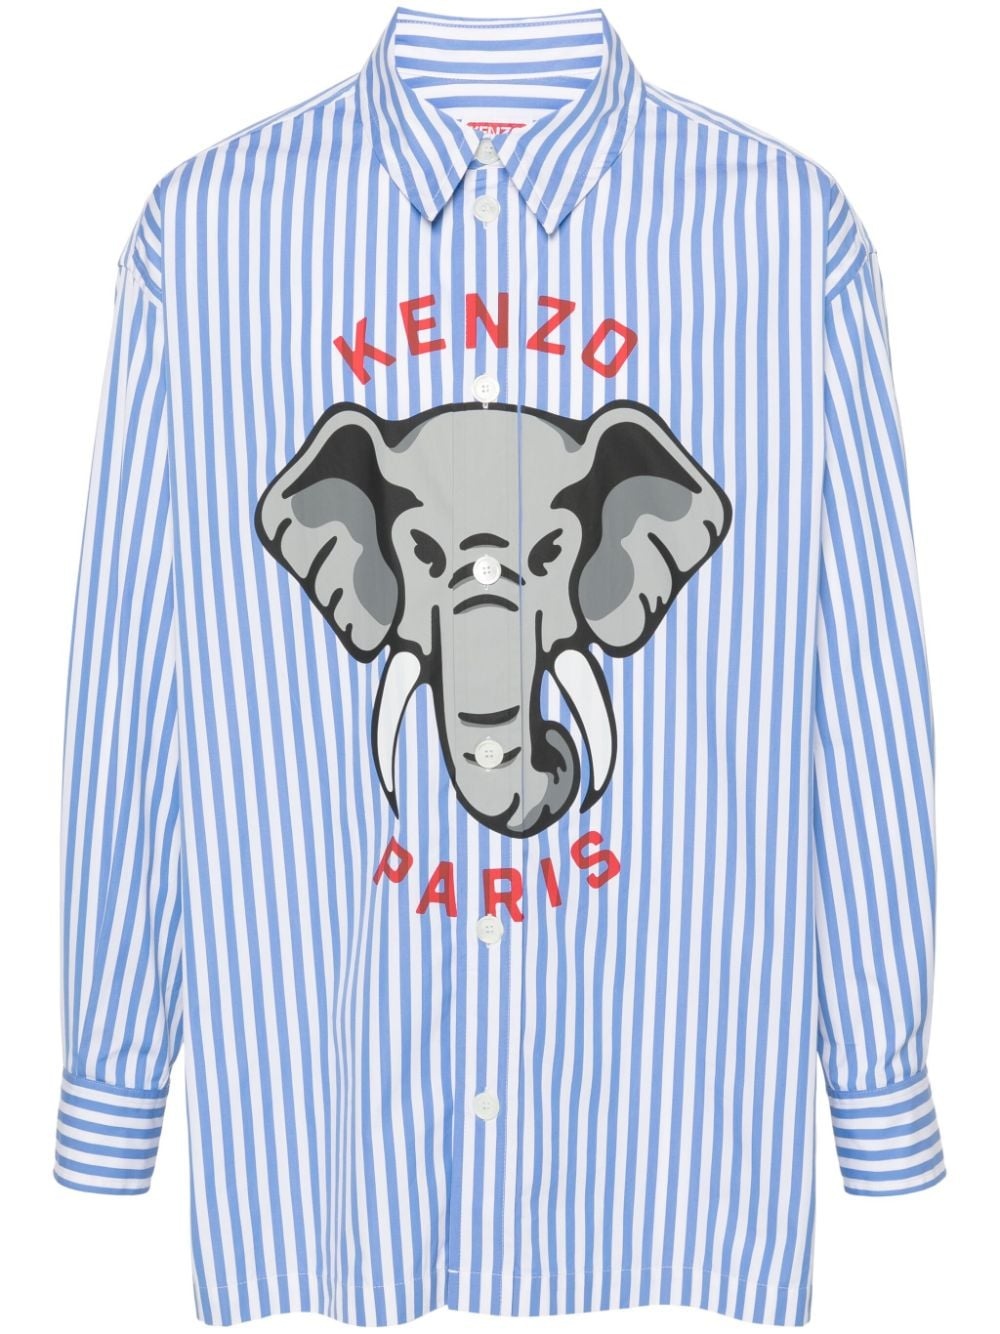 Elephant striped shirt - 1